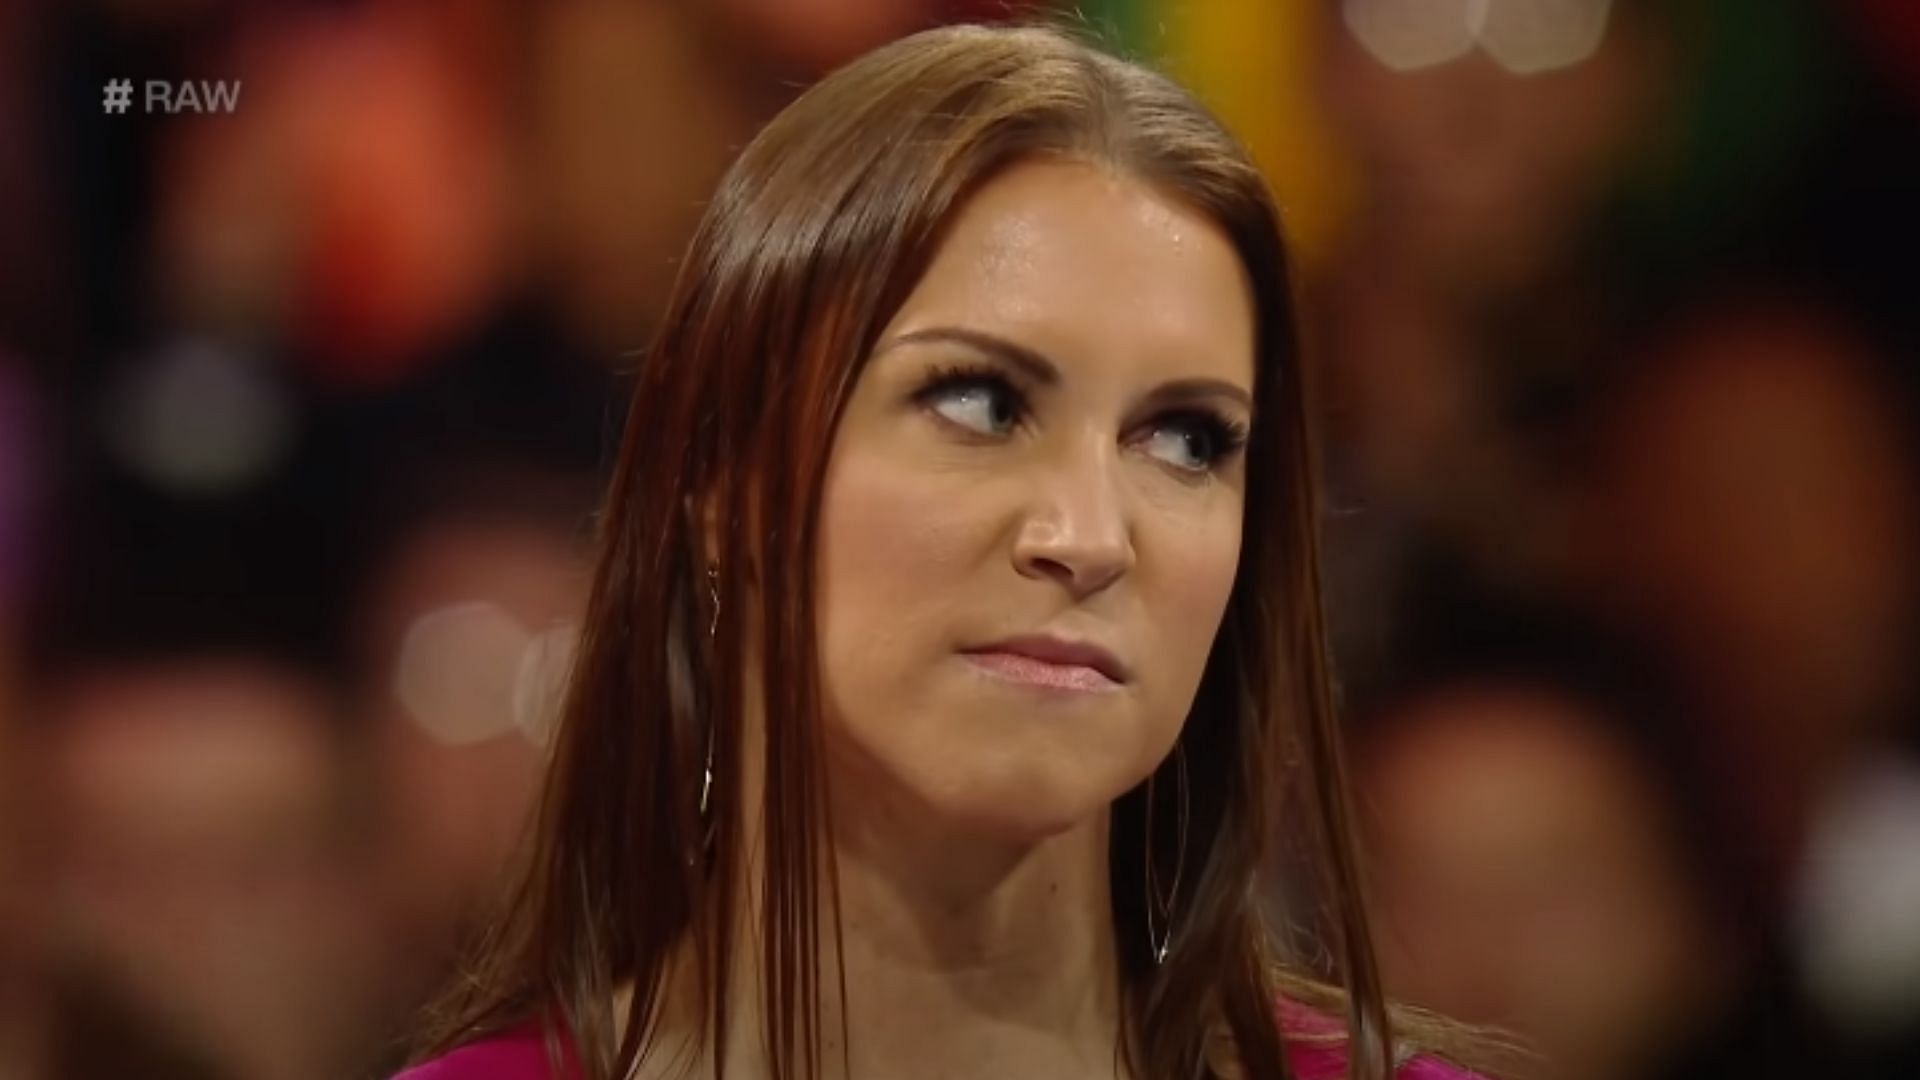 WWE Chief Brand Officer Stephanie McMahon